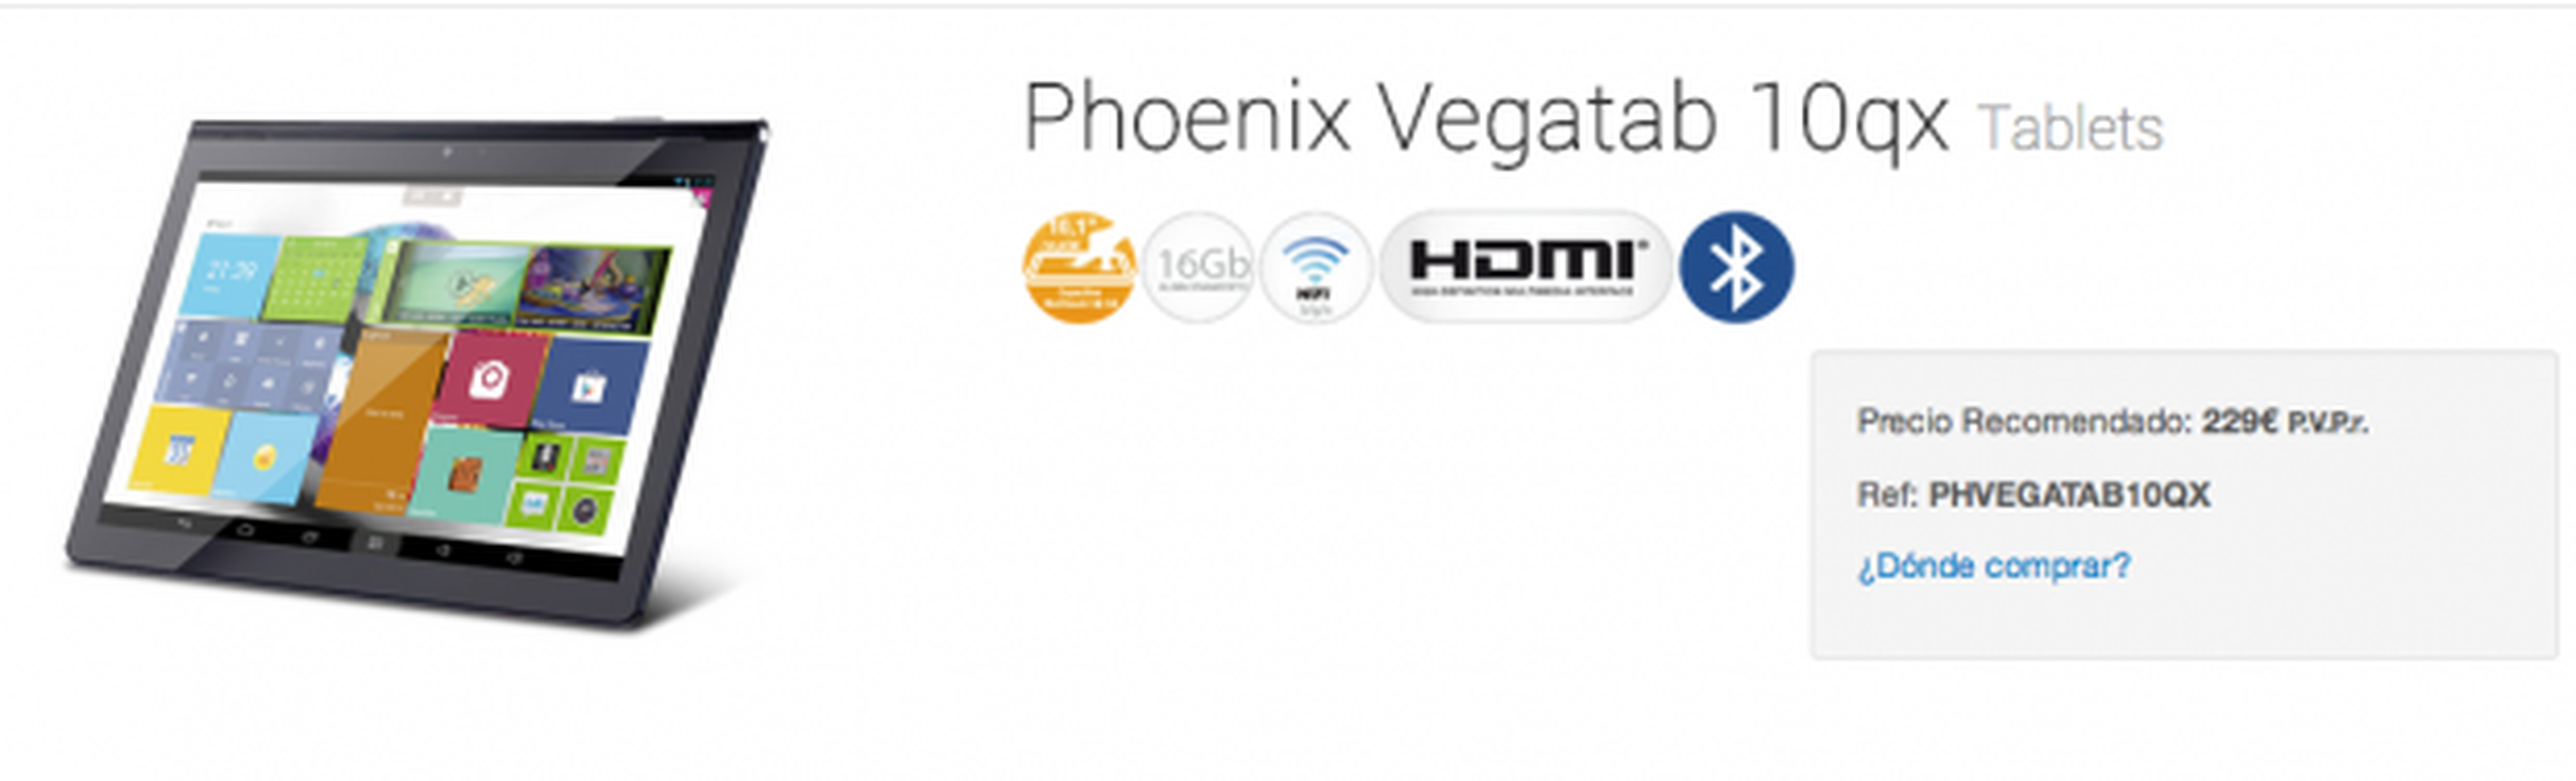 Phoenix Vegatab 10qx precio